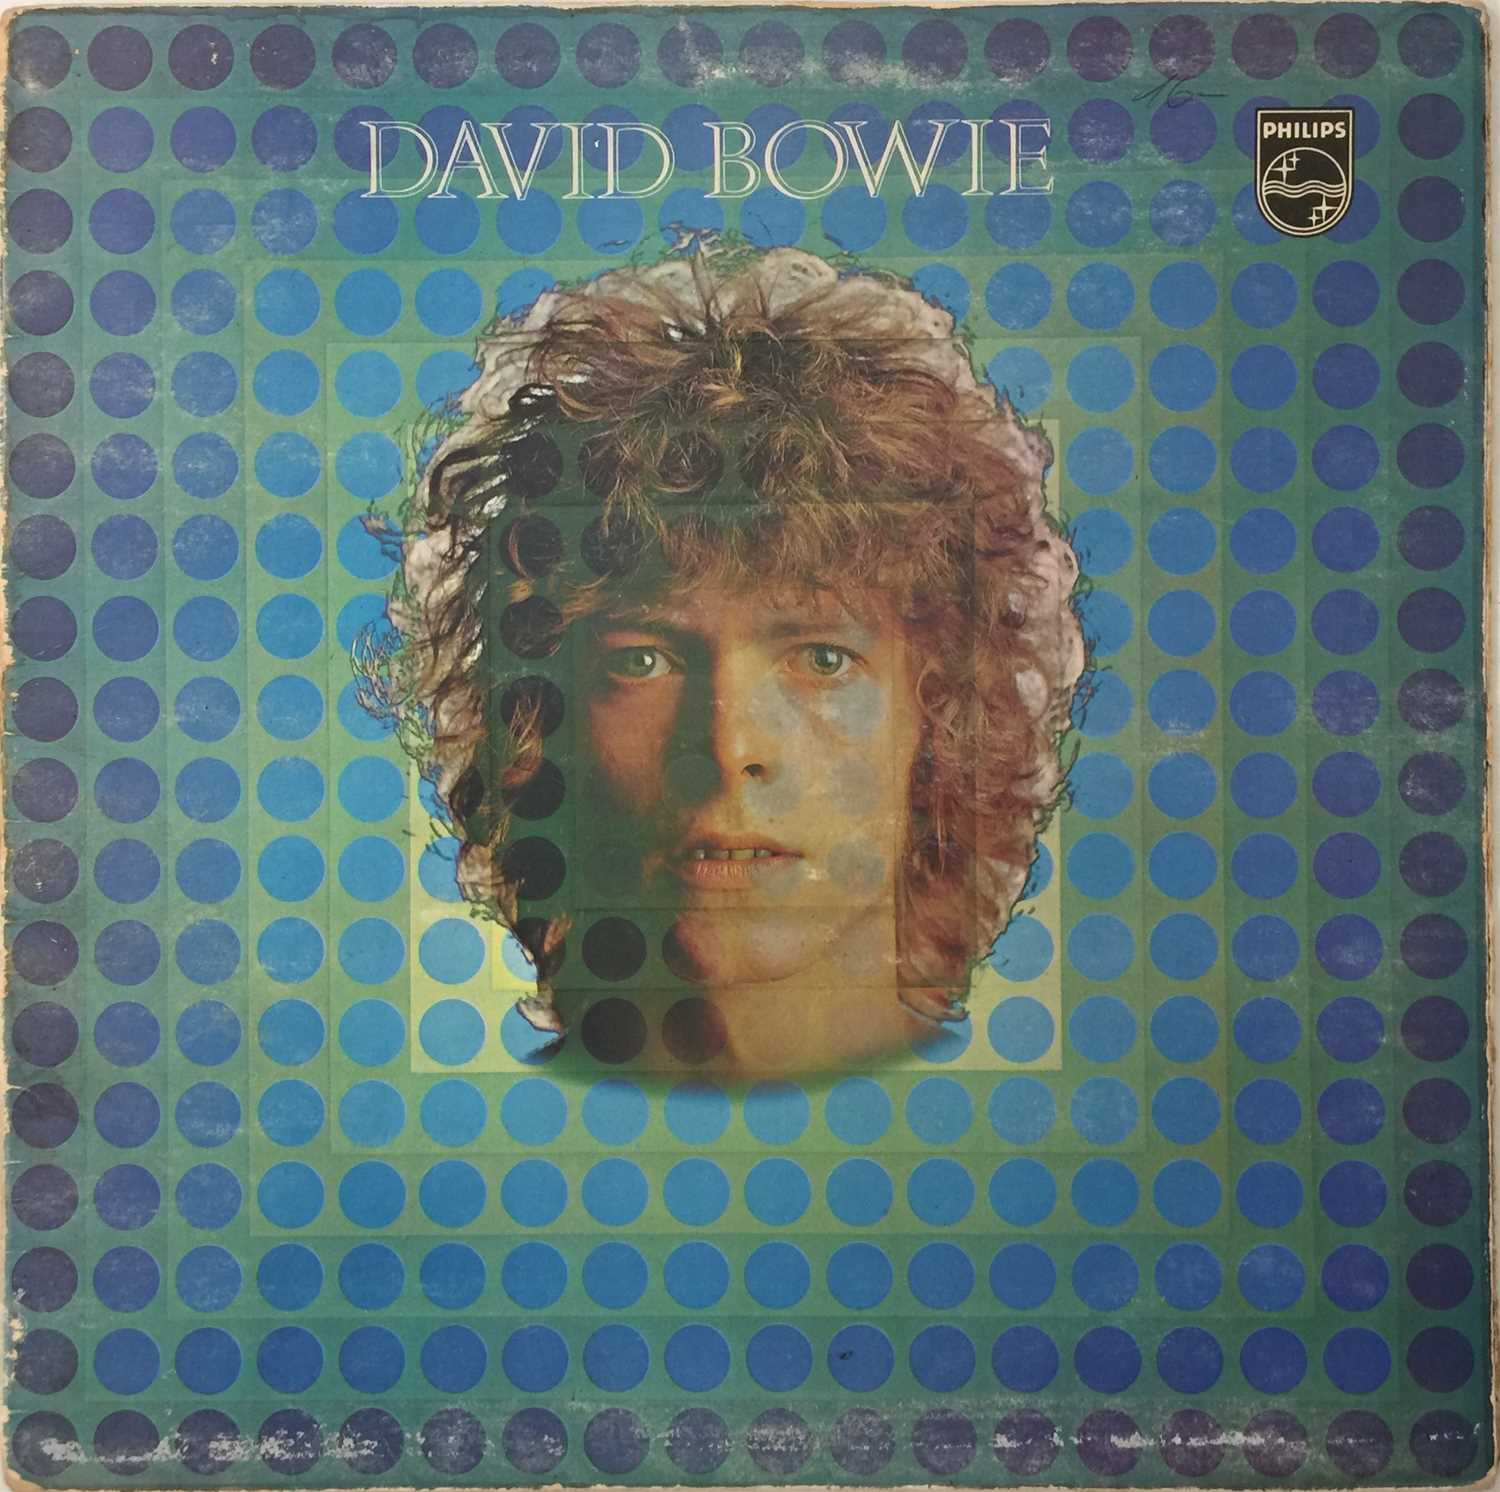 DAVID BOWIE - DAVID BOWIE LP (ORIGINAL UK PHILIPS PRESSING - SBL 7912) - Image 2 of 5